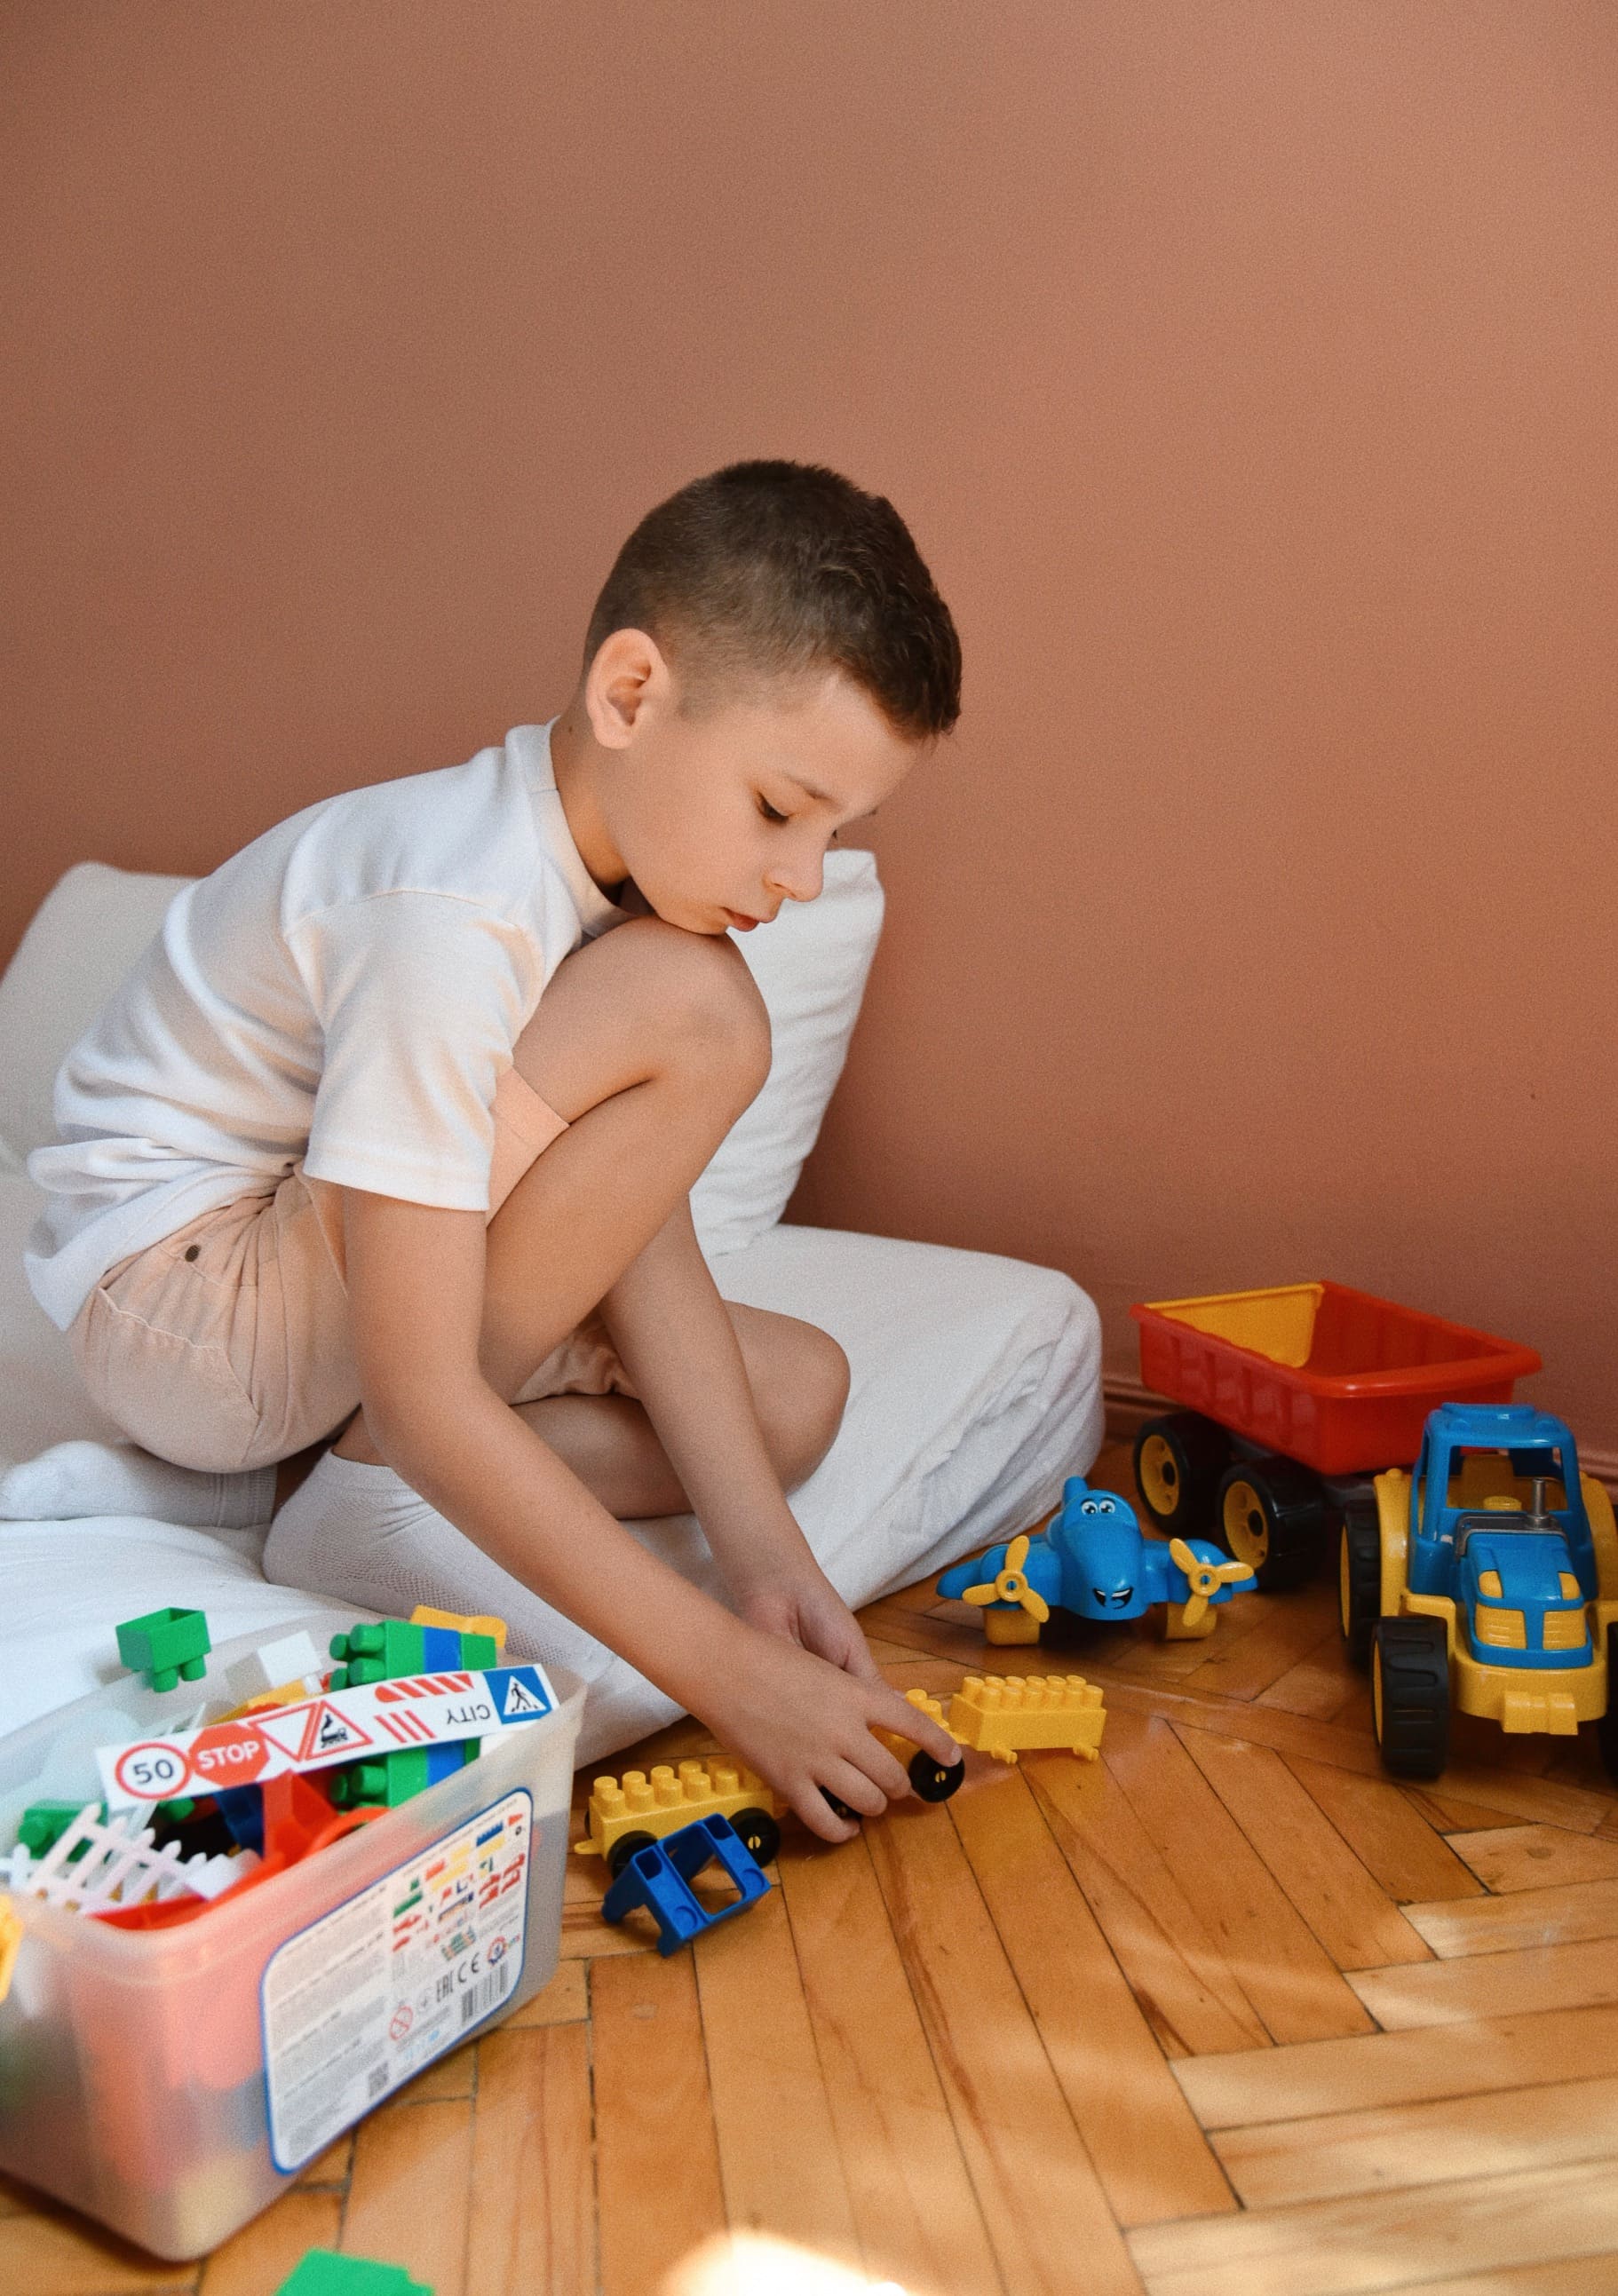 Strateg toys distract a child during an air raid alert - Alexander Sivak